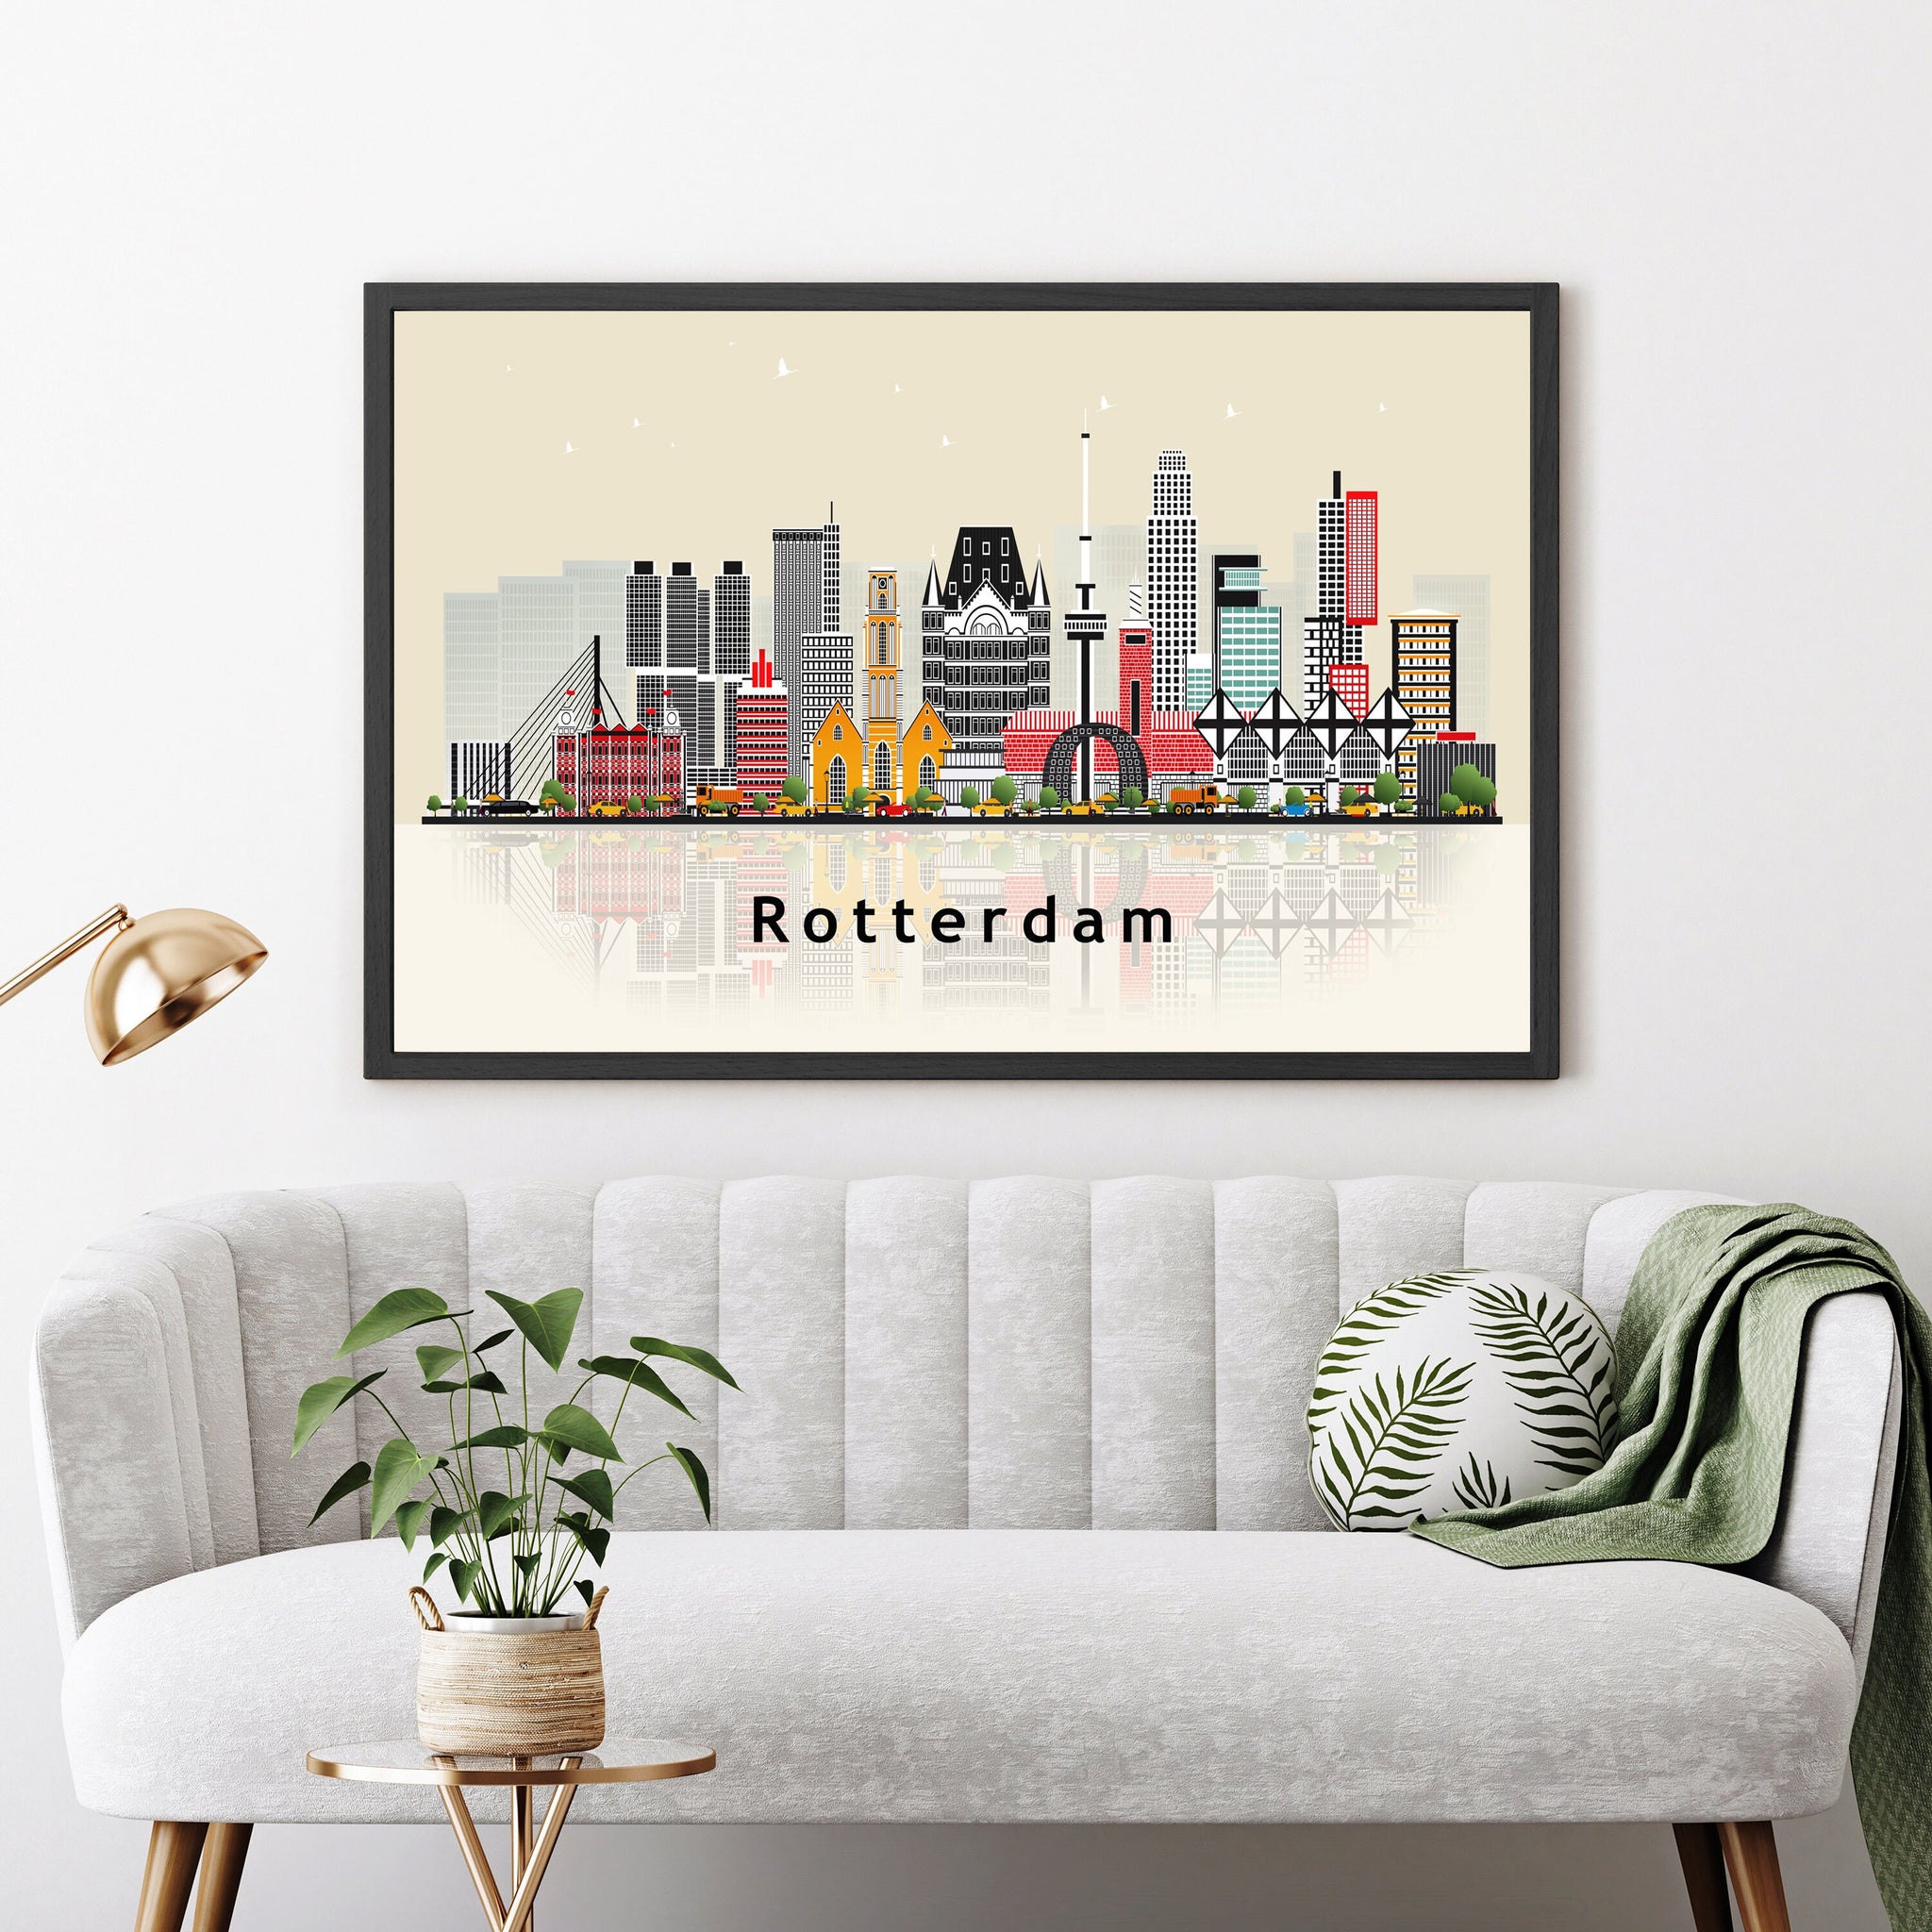 ROTTERDAM NETHERLANDS Illustration skyline poster, Modern skyline cityscape poster print, Landmark map poster, Home wall art decoration